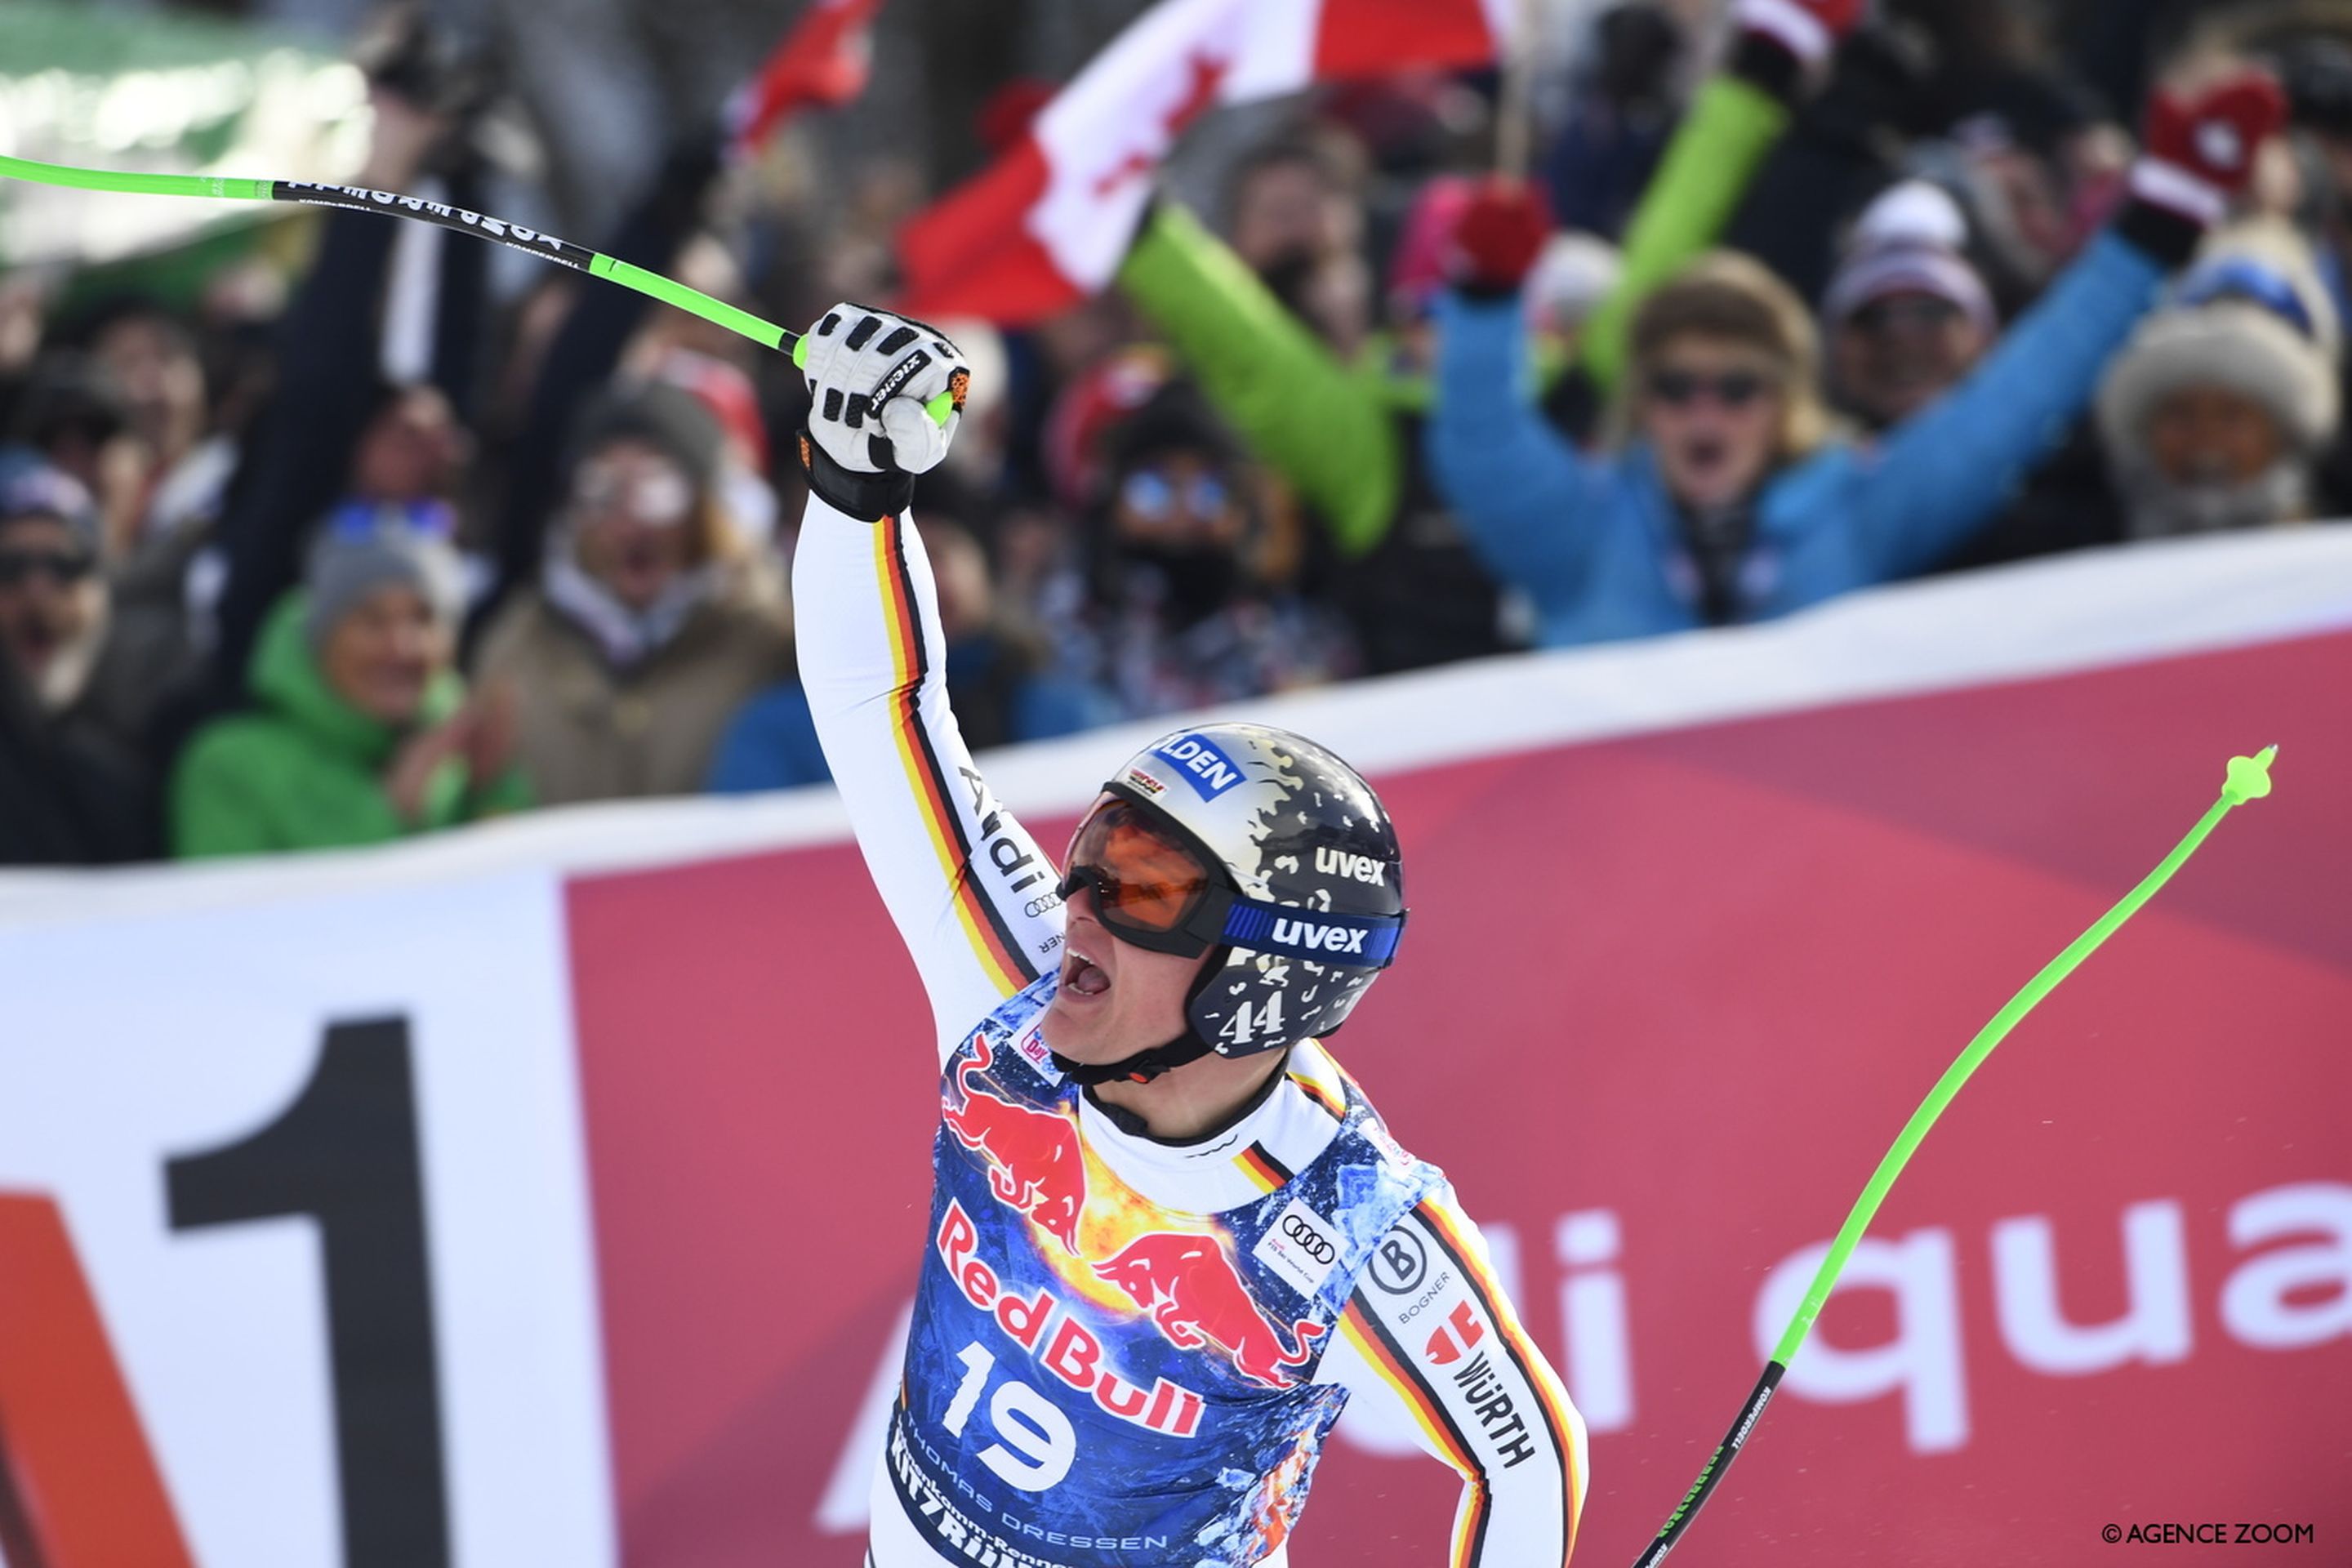 Thomas Dressen (GER) celebrates winning the Kitzbuehel downhill in 2018